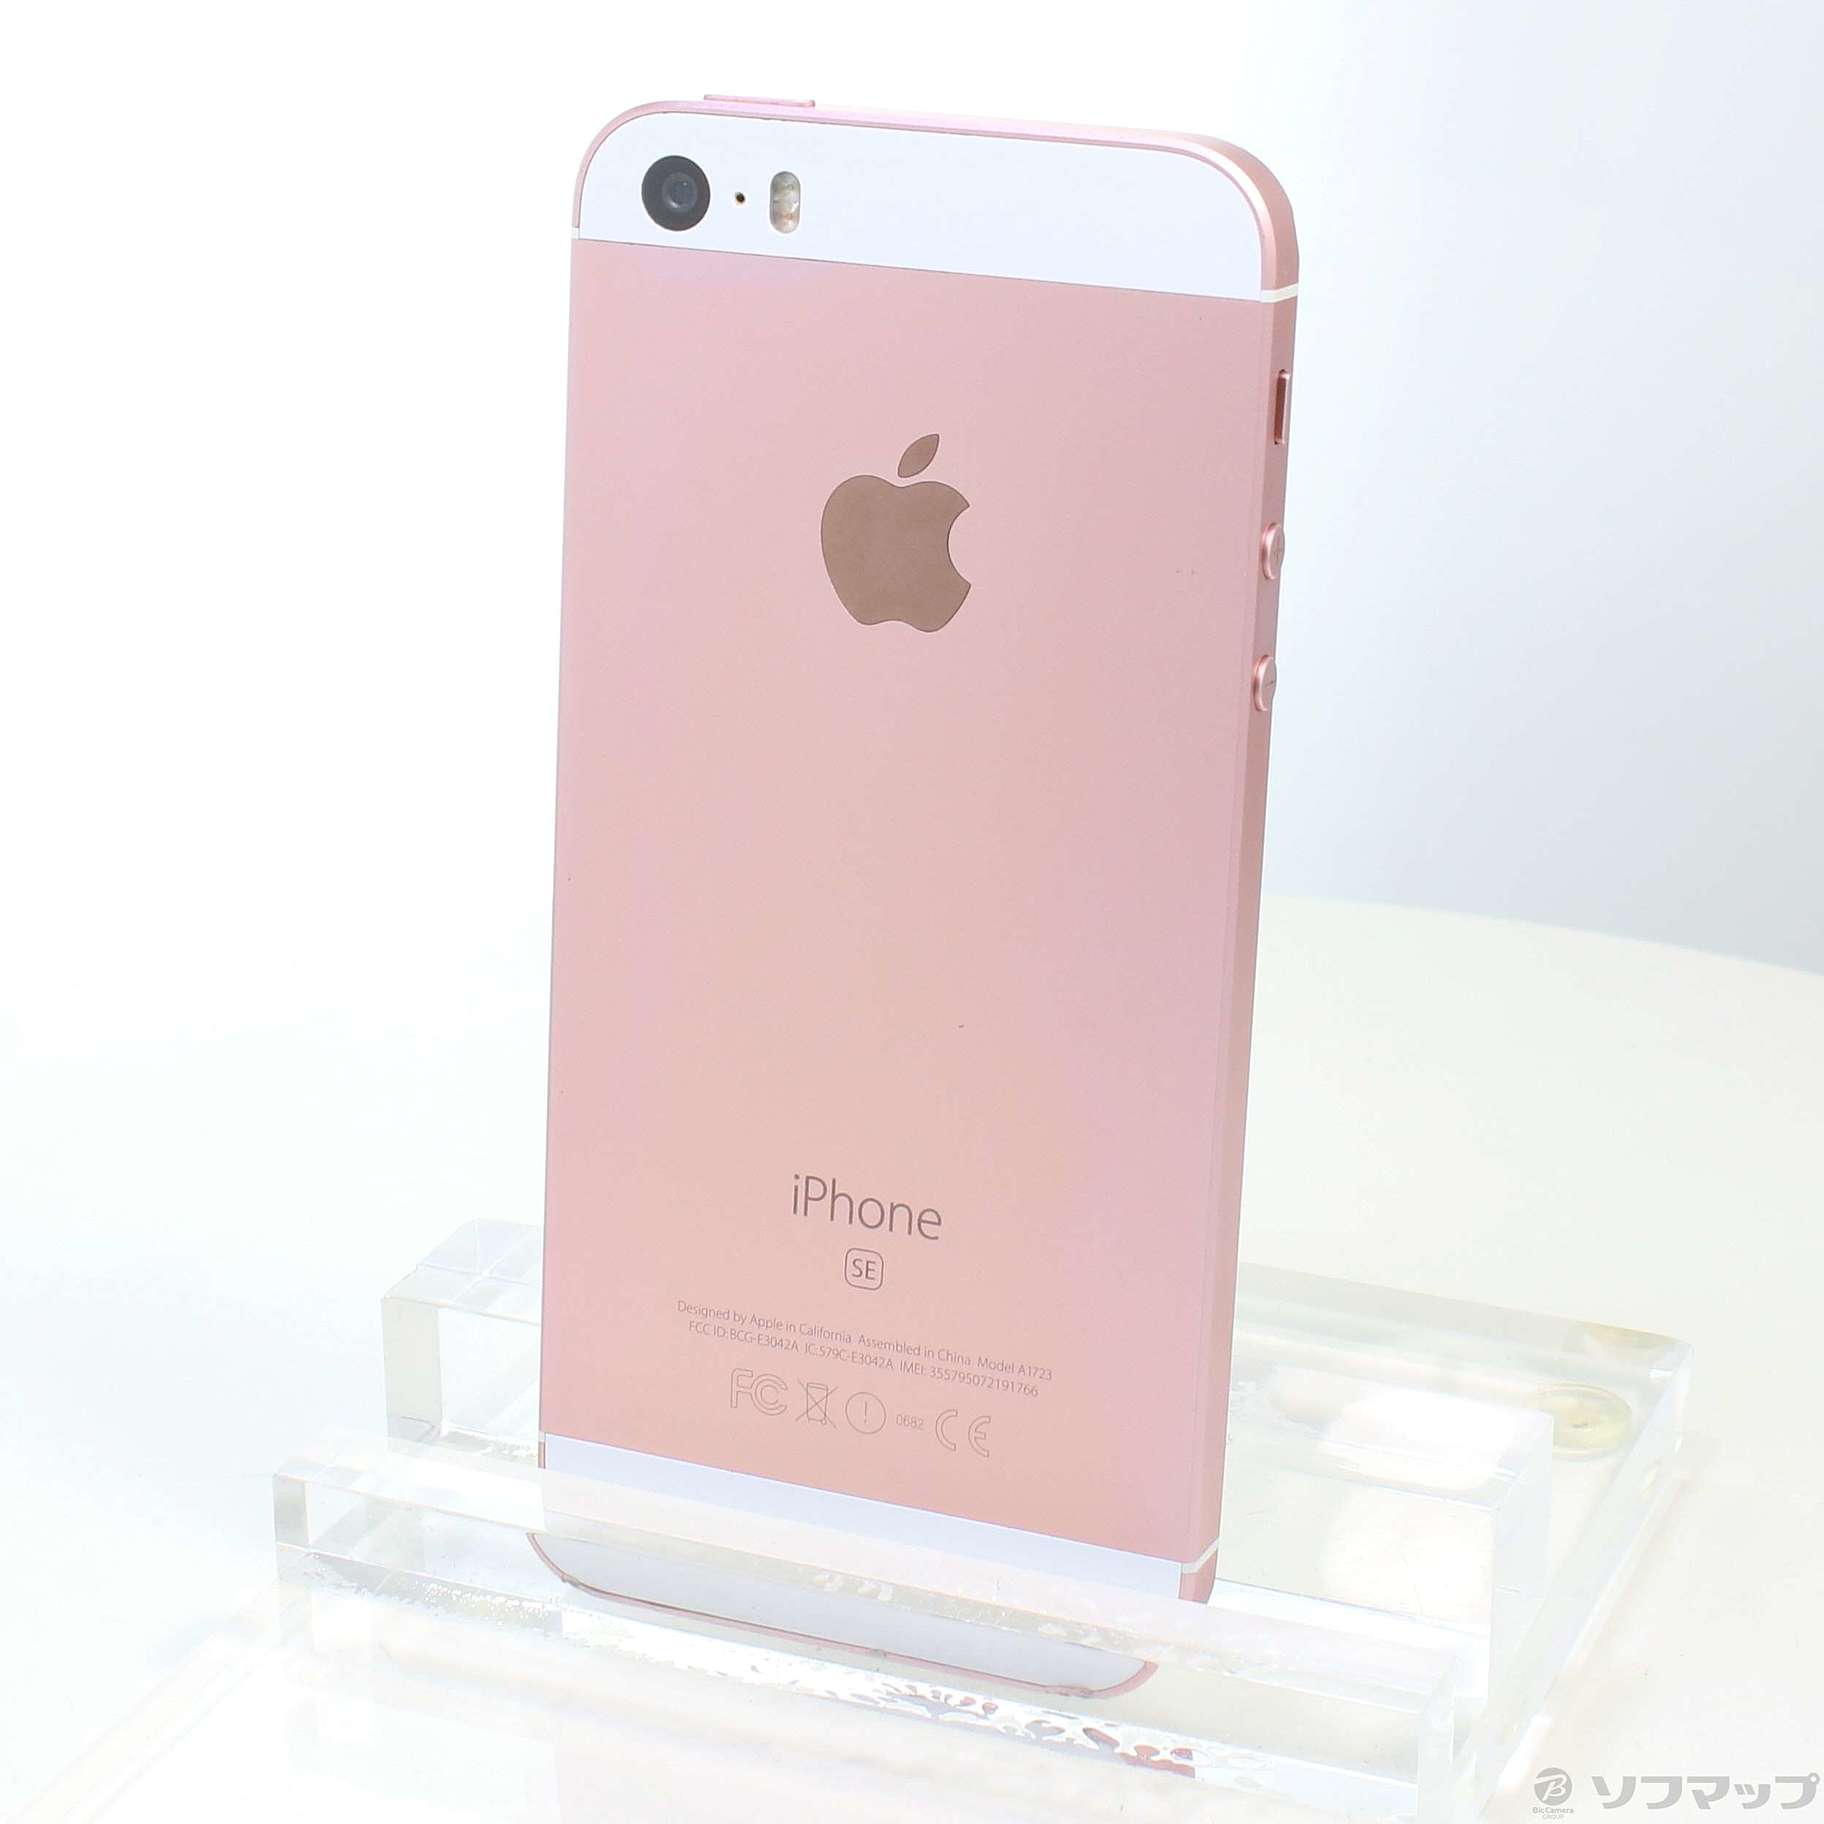 iPhone SE 64GB simフリー ローズゴールド - スマートフォン本体